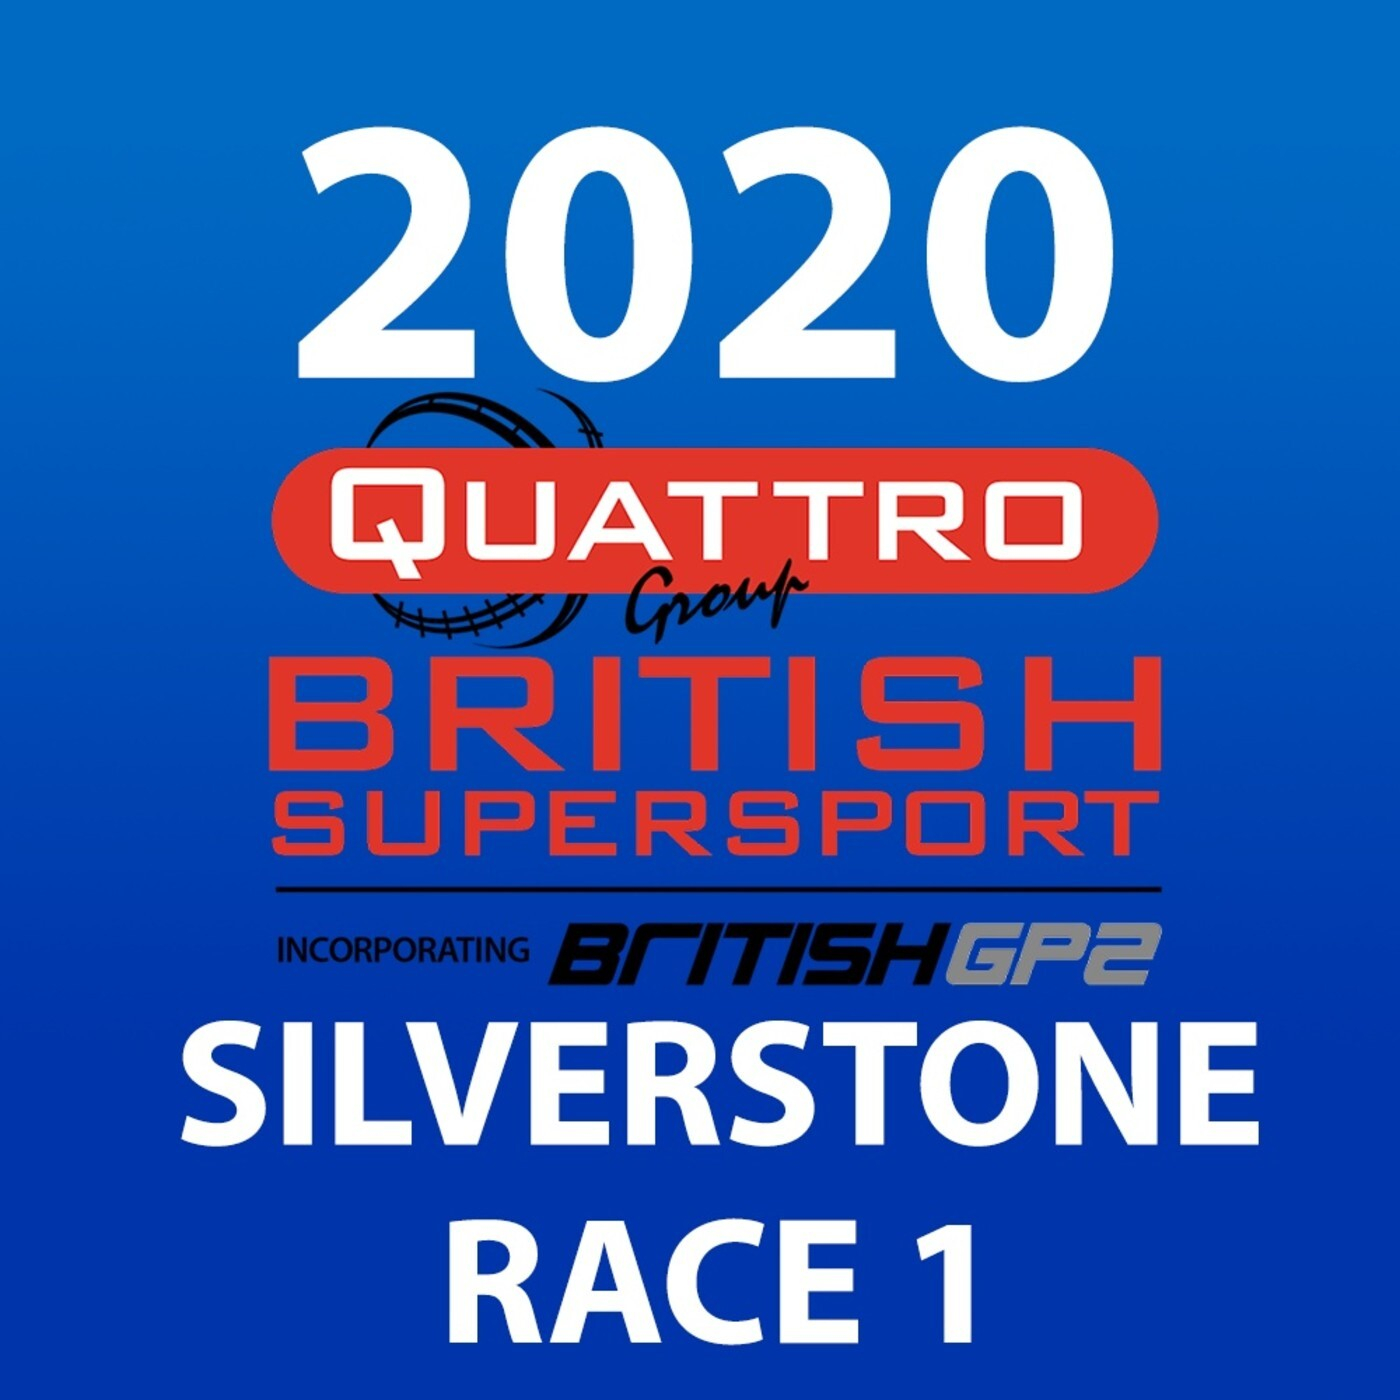 Quattro Group British Supersport Championship and British GP2 Sprint - Silverstone 2020 Race 1